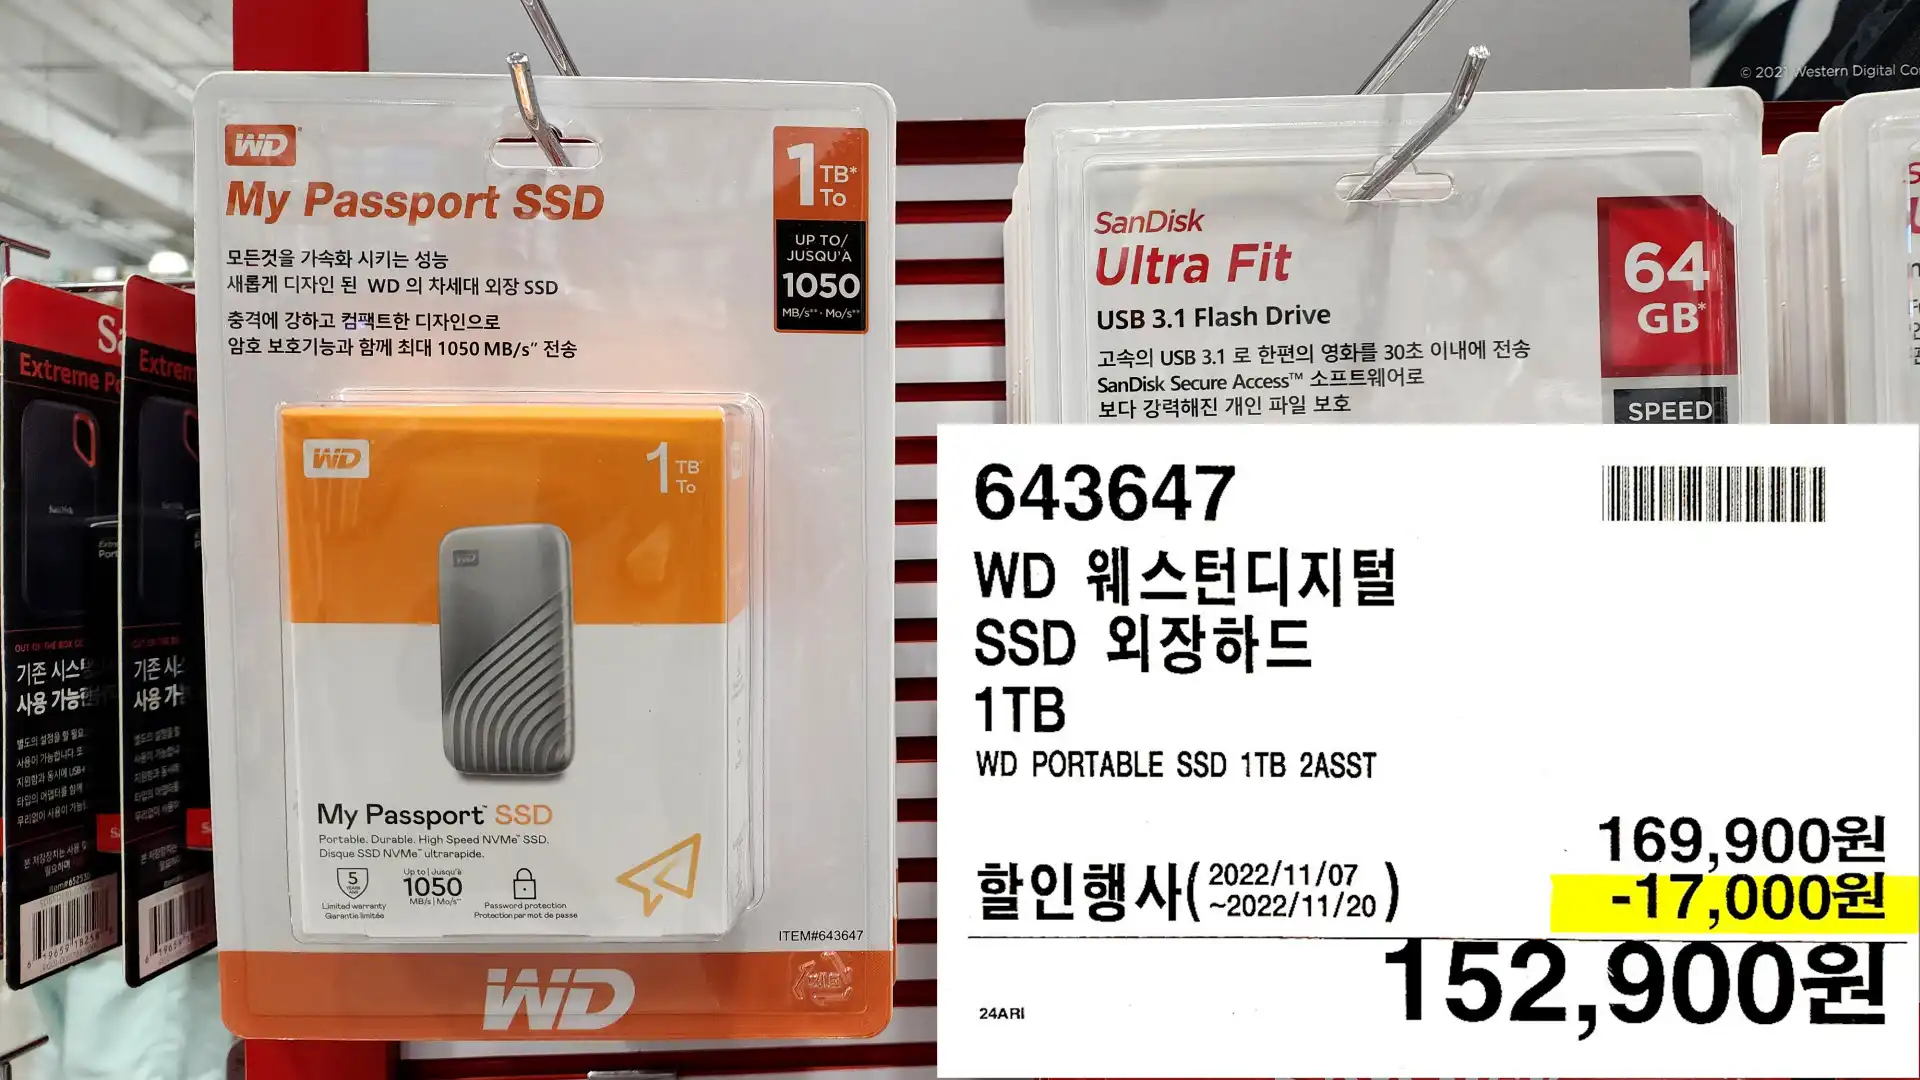 WD 웨스턴디지털
SSD 외장하드
1TB
WD PORTABLE SSD 1TB 2ASST
152&#44;900원